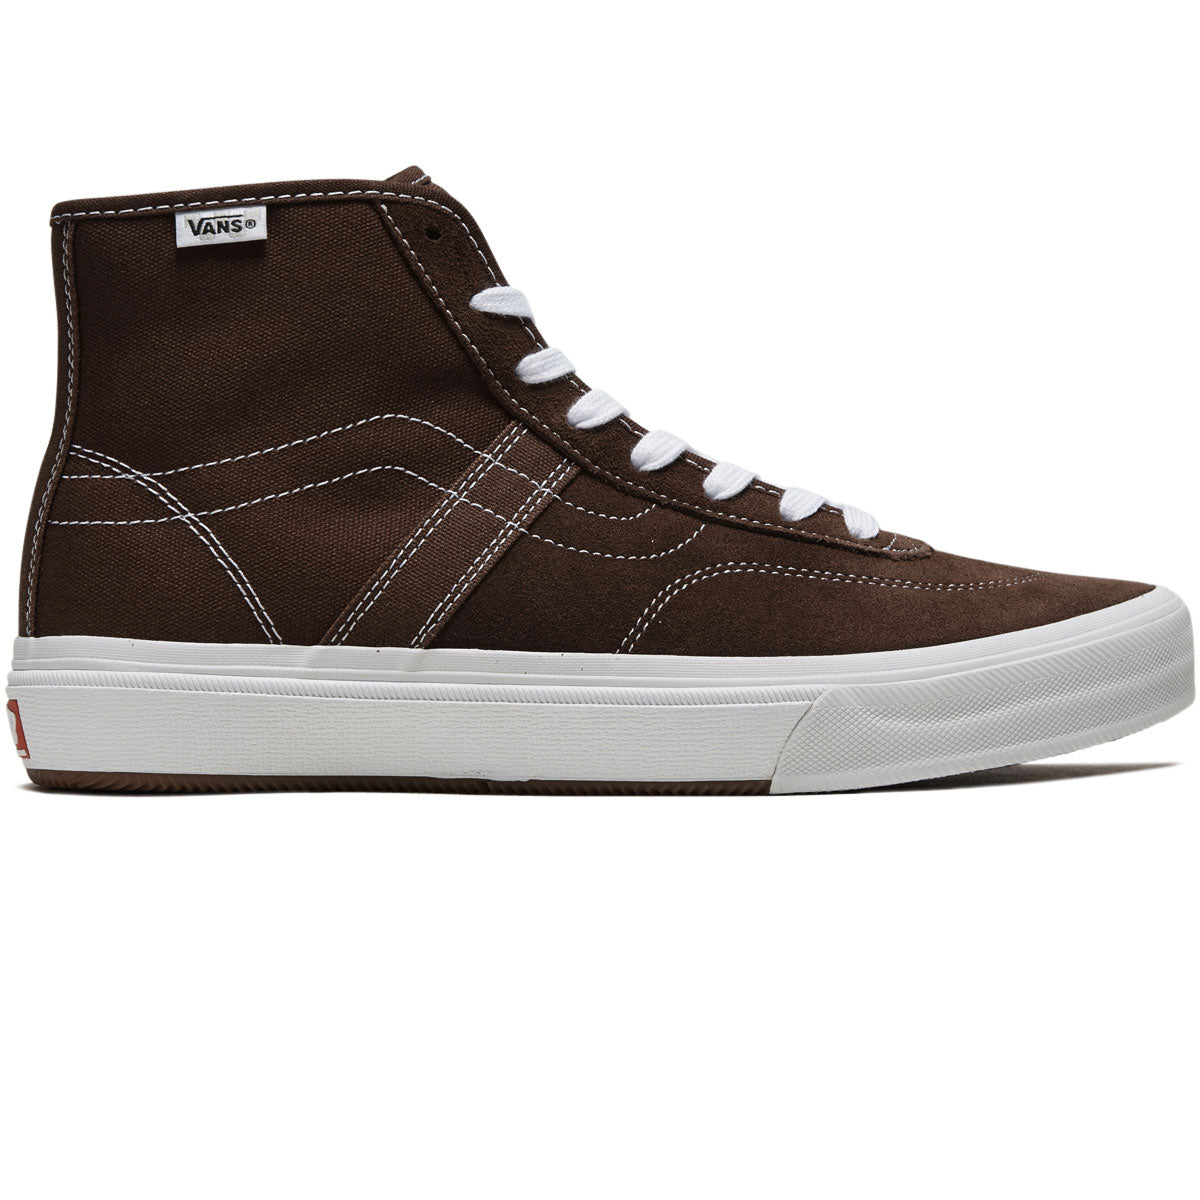 Vans Crockett High Decon Shoes - Brown/White image 1